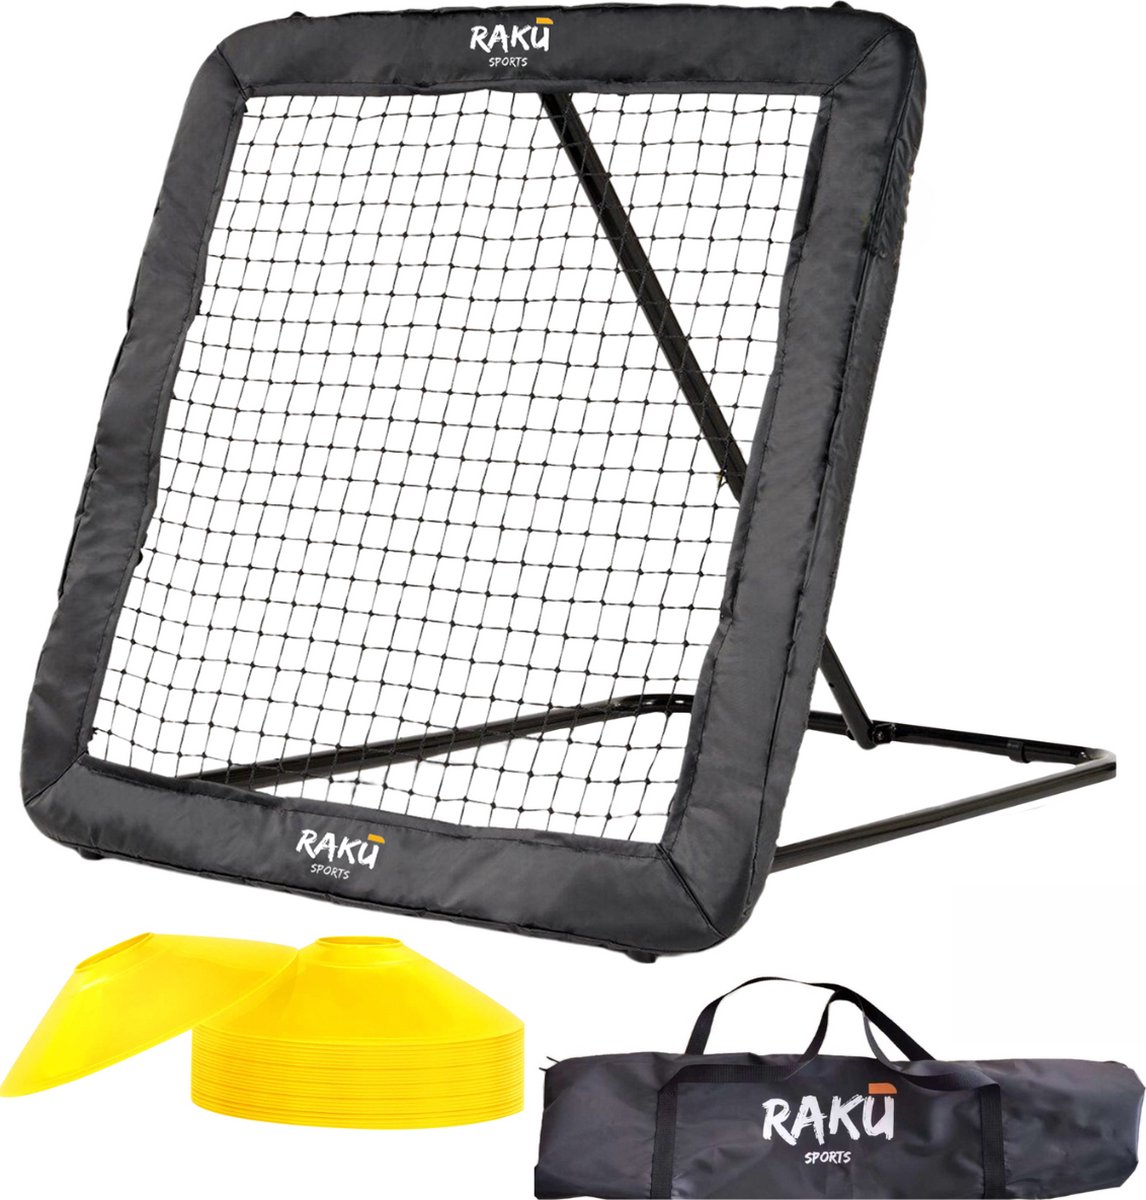 Raku Sports Voetbal Rebounder Voetbaldoel - Accessoires & Spullen voor Training - Voetbalgoal met Pionnen - Trainingsmateriaal - Tchouk - Raku